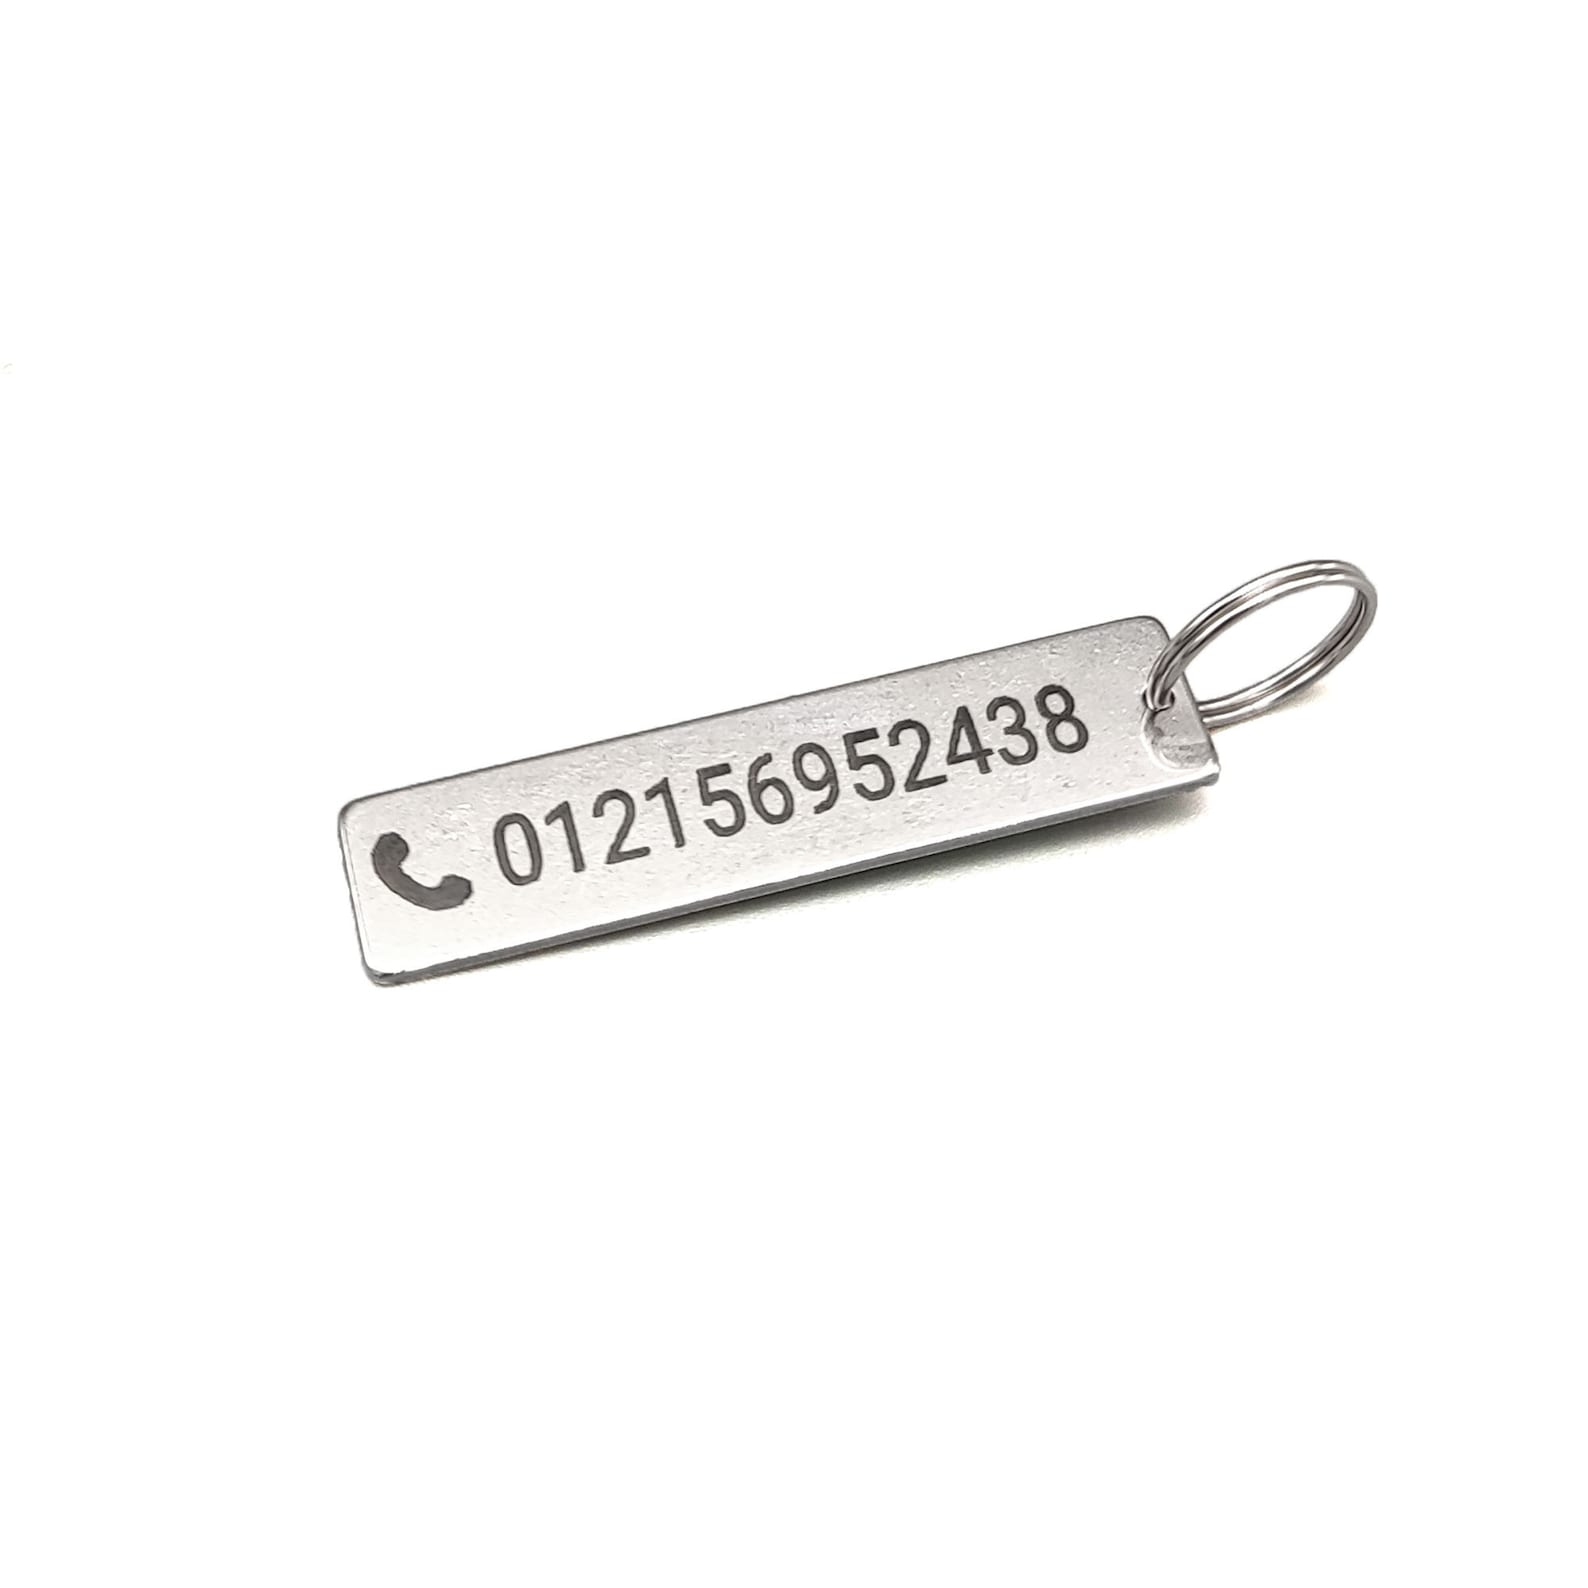 Schlüsselanhänger mit Wunschgravur - Telefonnummer Gravur - Beschriftung